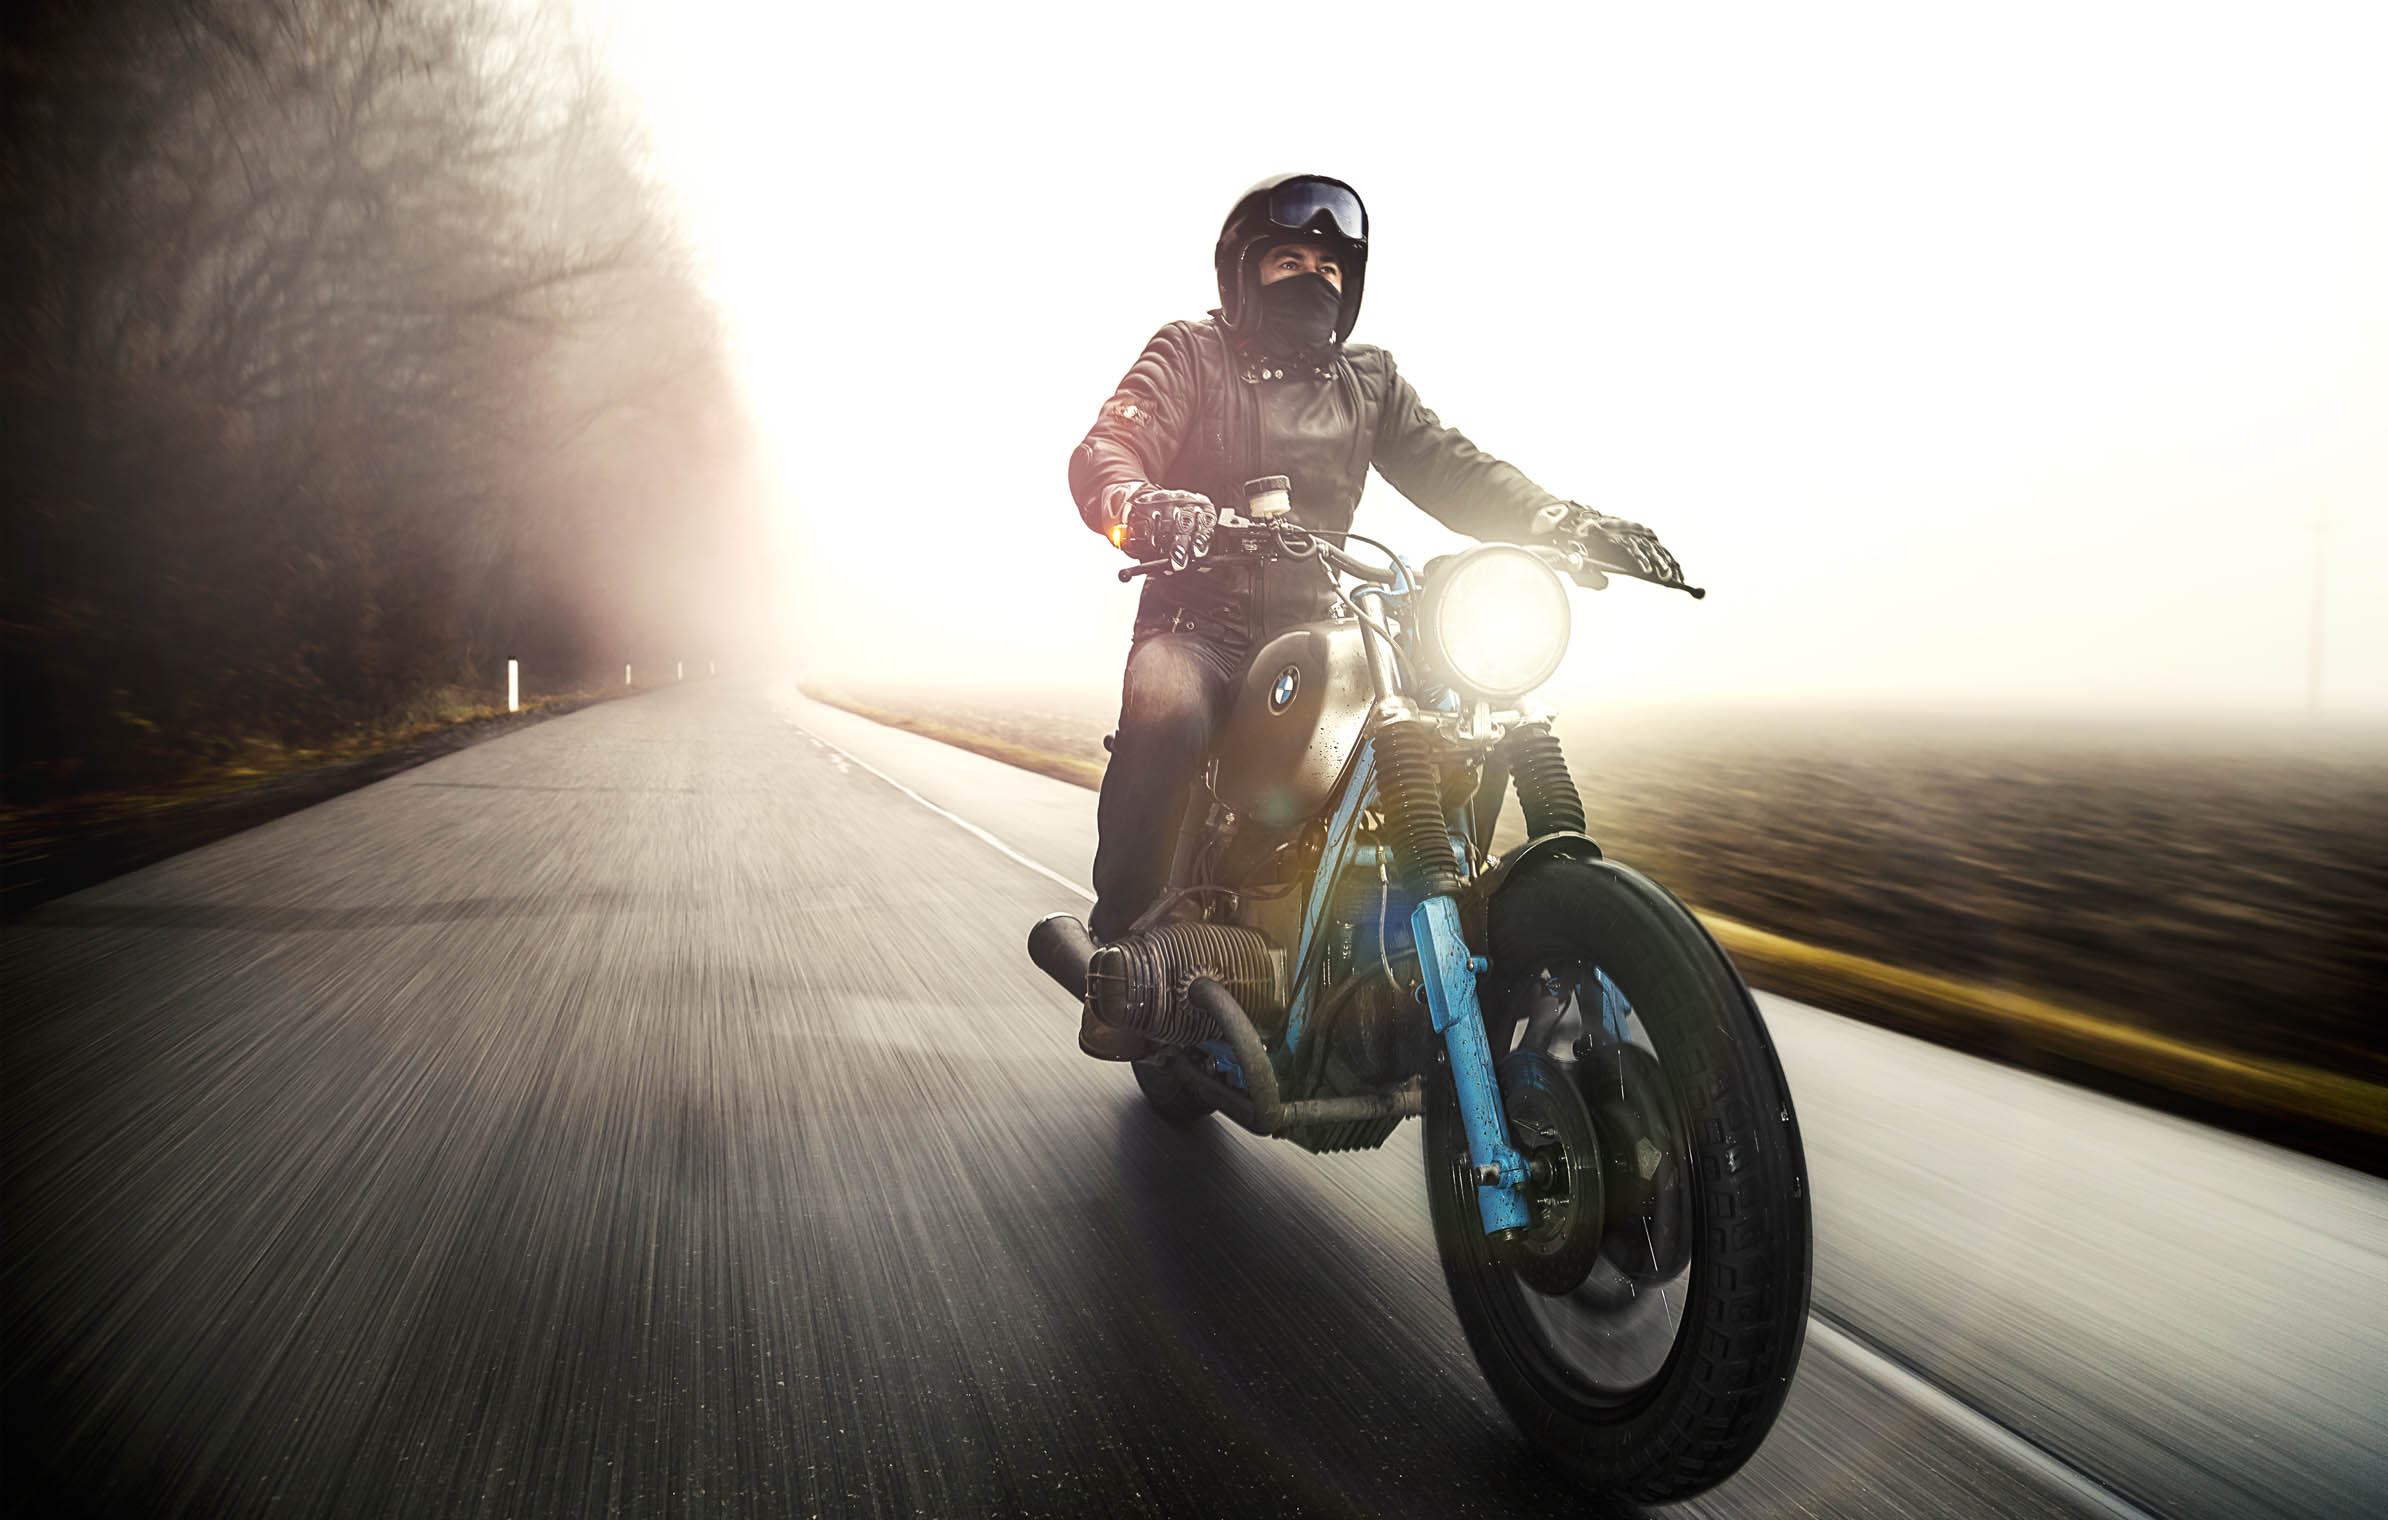 titan_roadtrip_motorcycles_riding_street